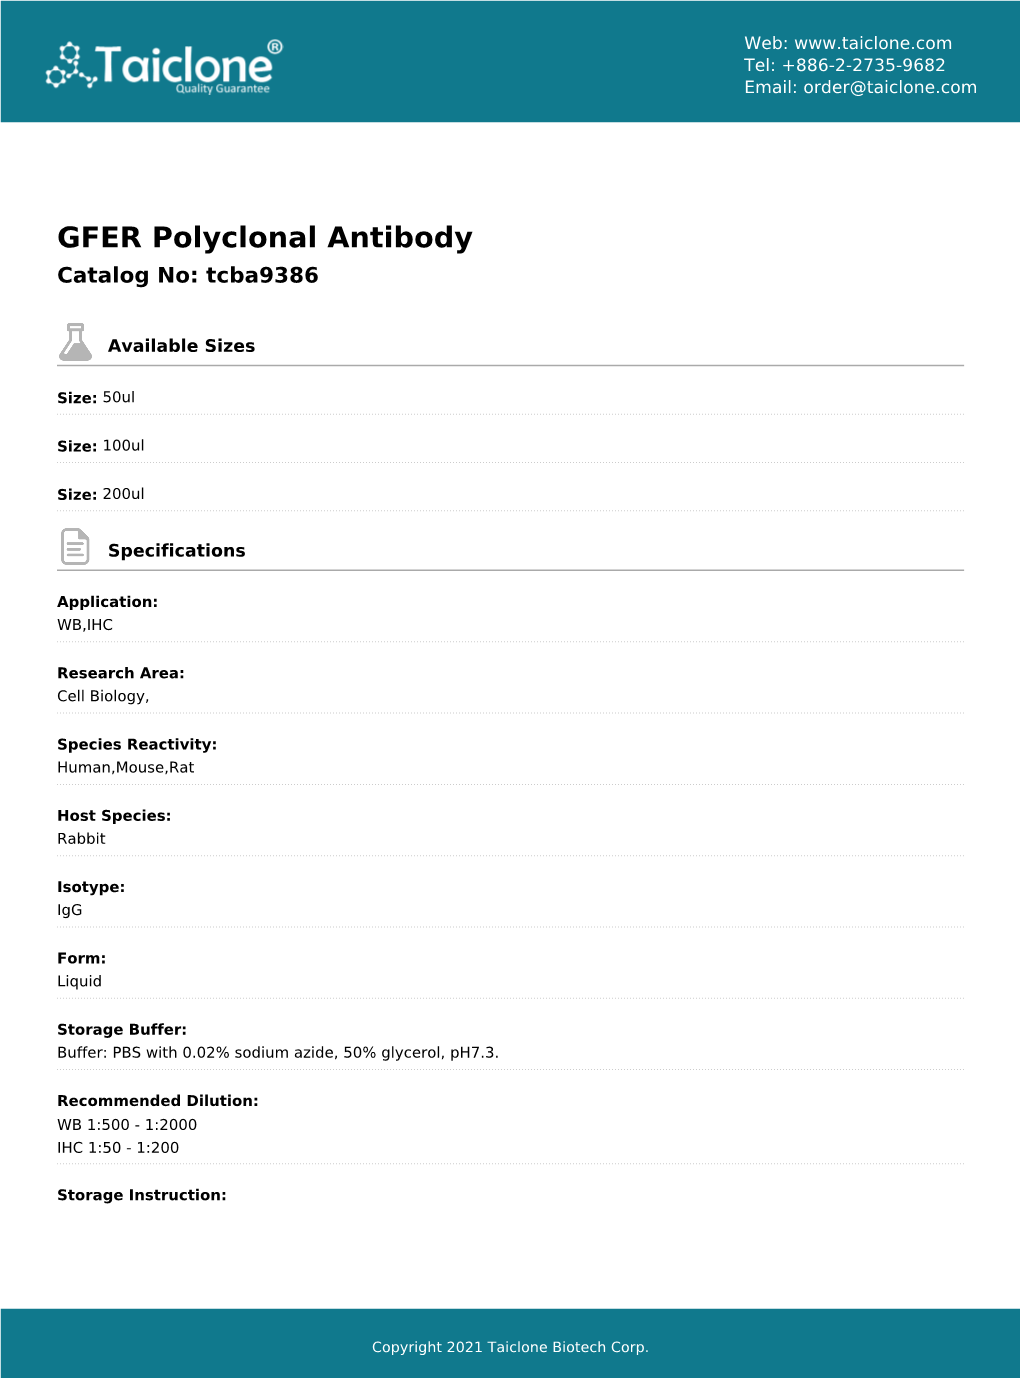 GFER Polyclonal Antibody Catalog No: Tcba9386